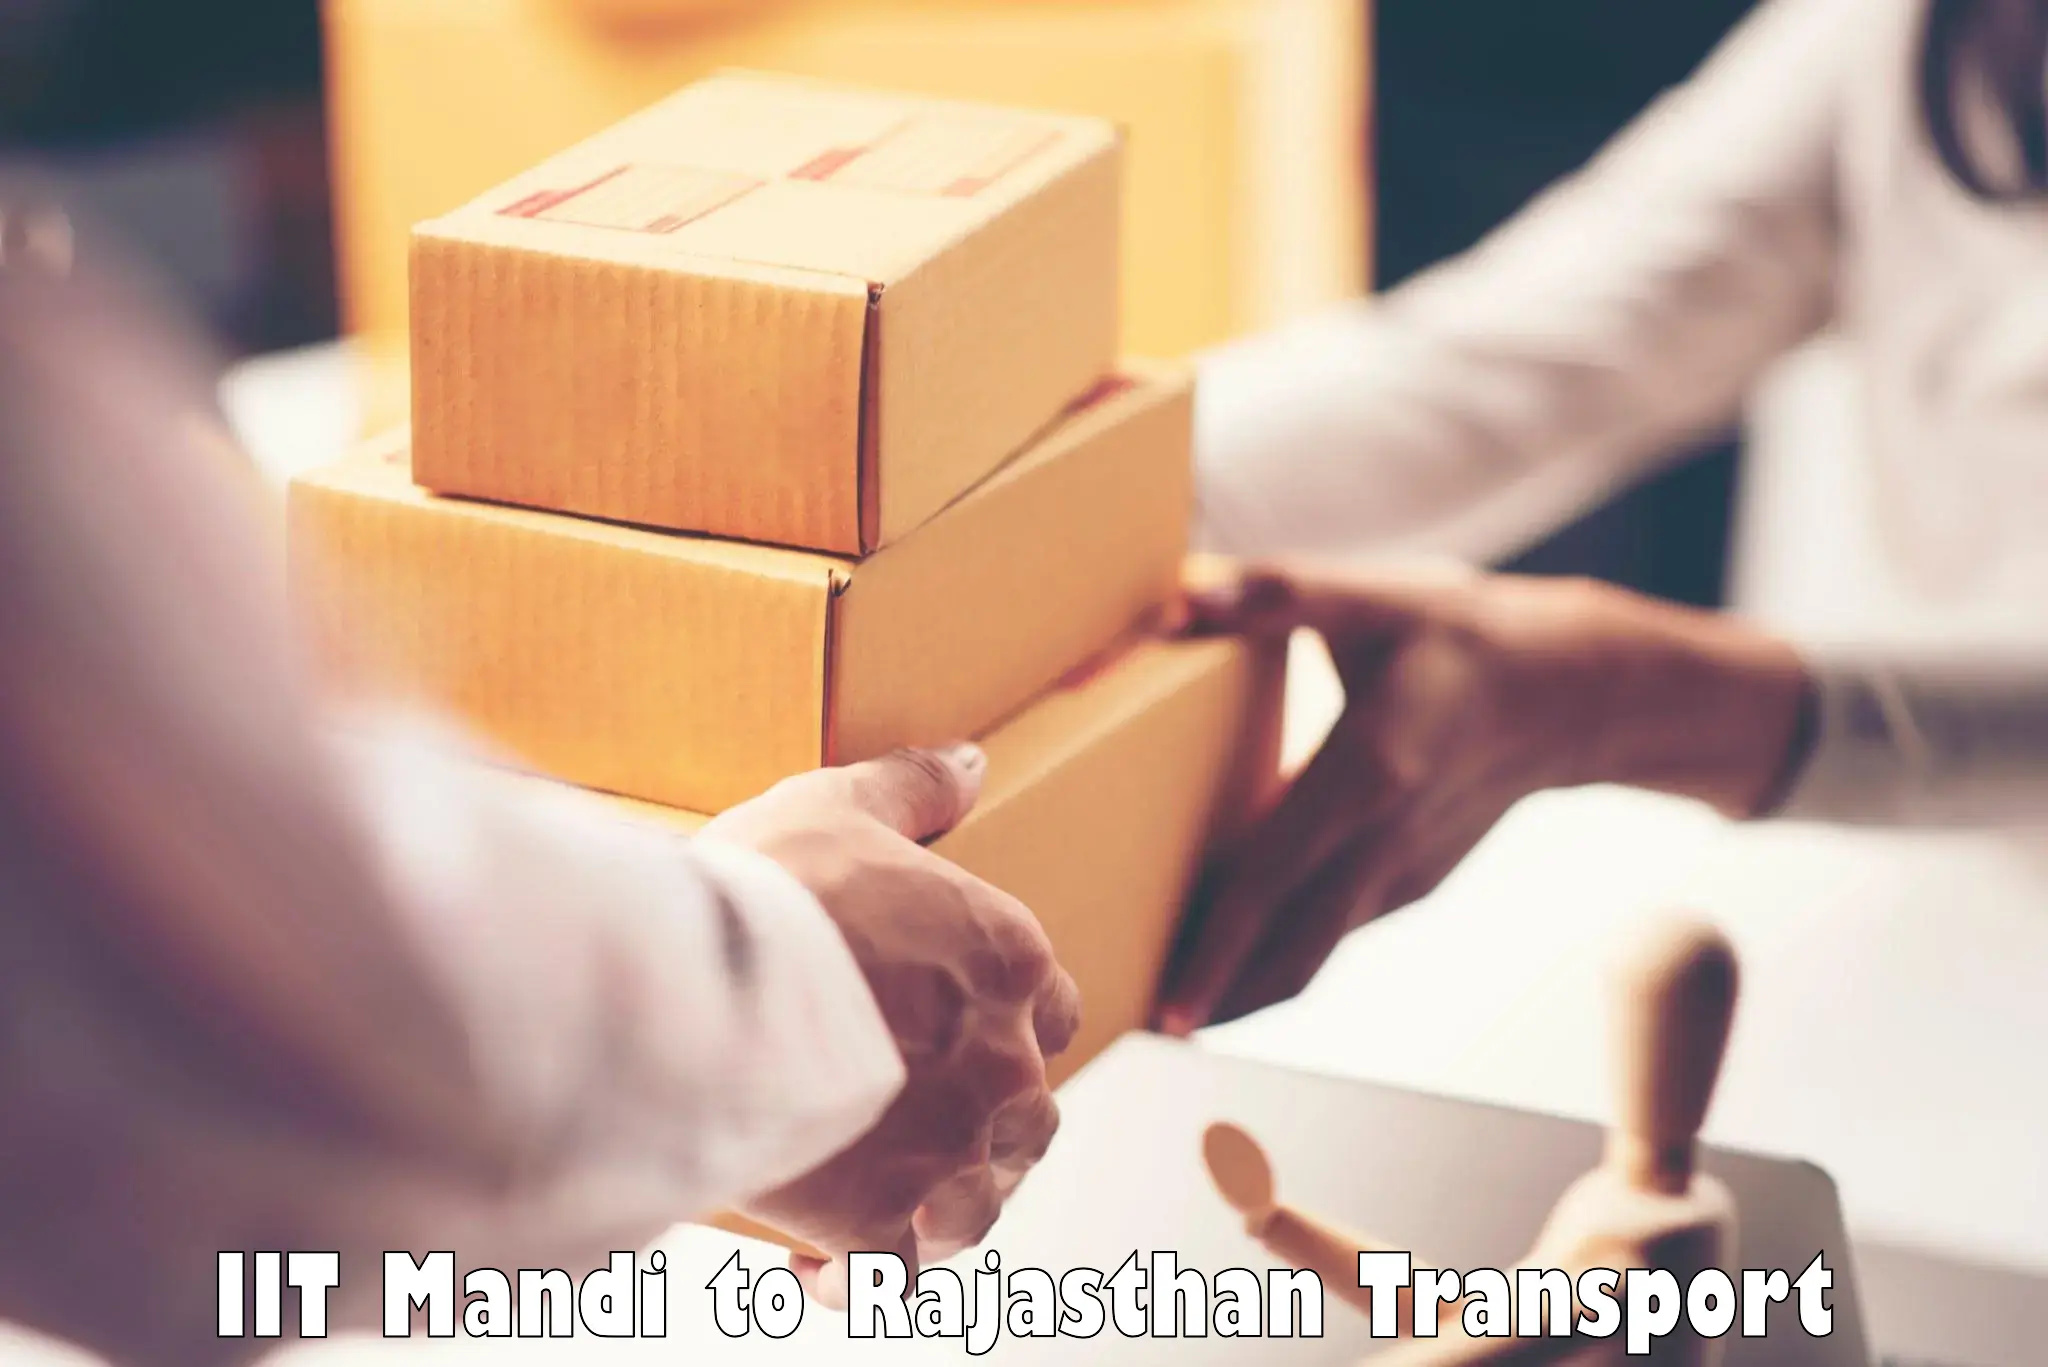 Online transport service IIT Mandi to Udaipur